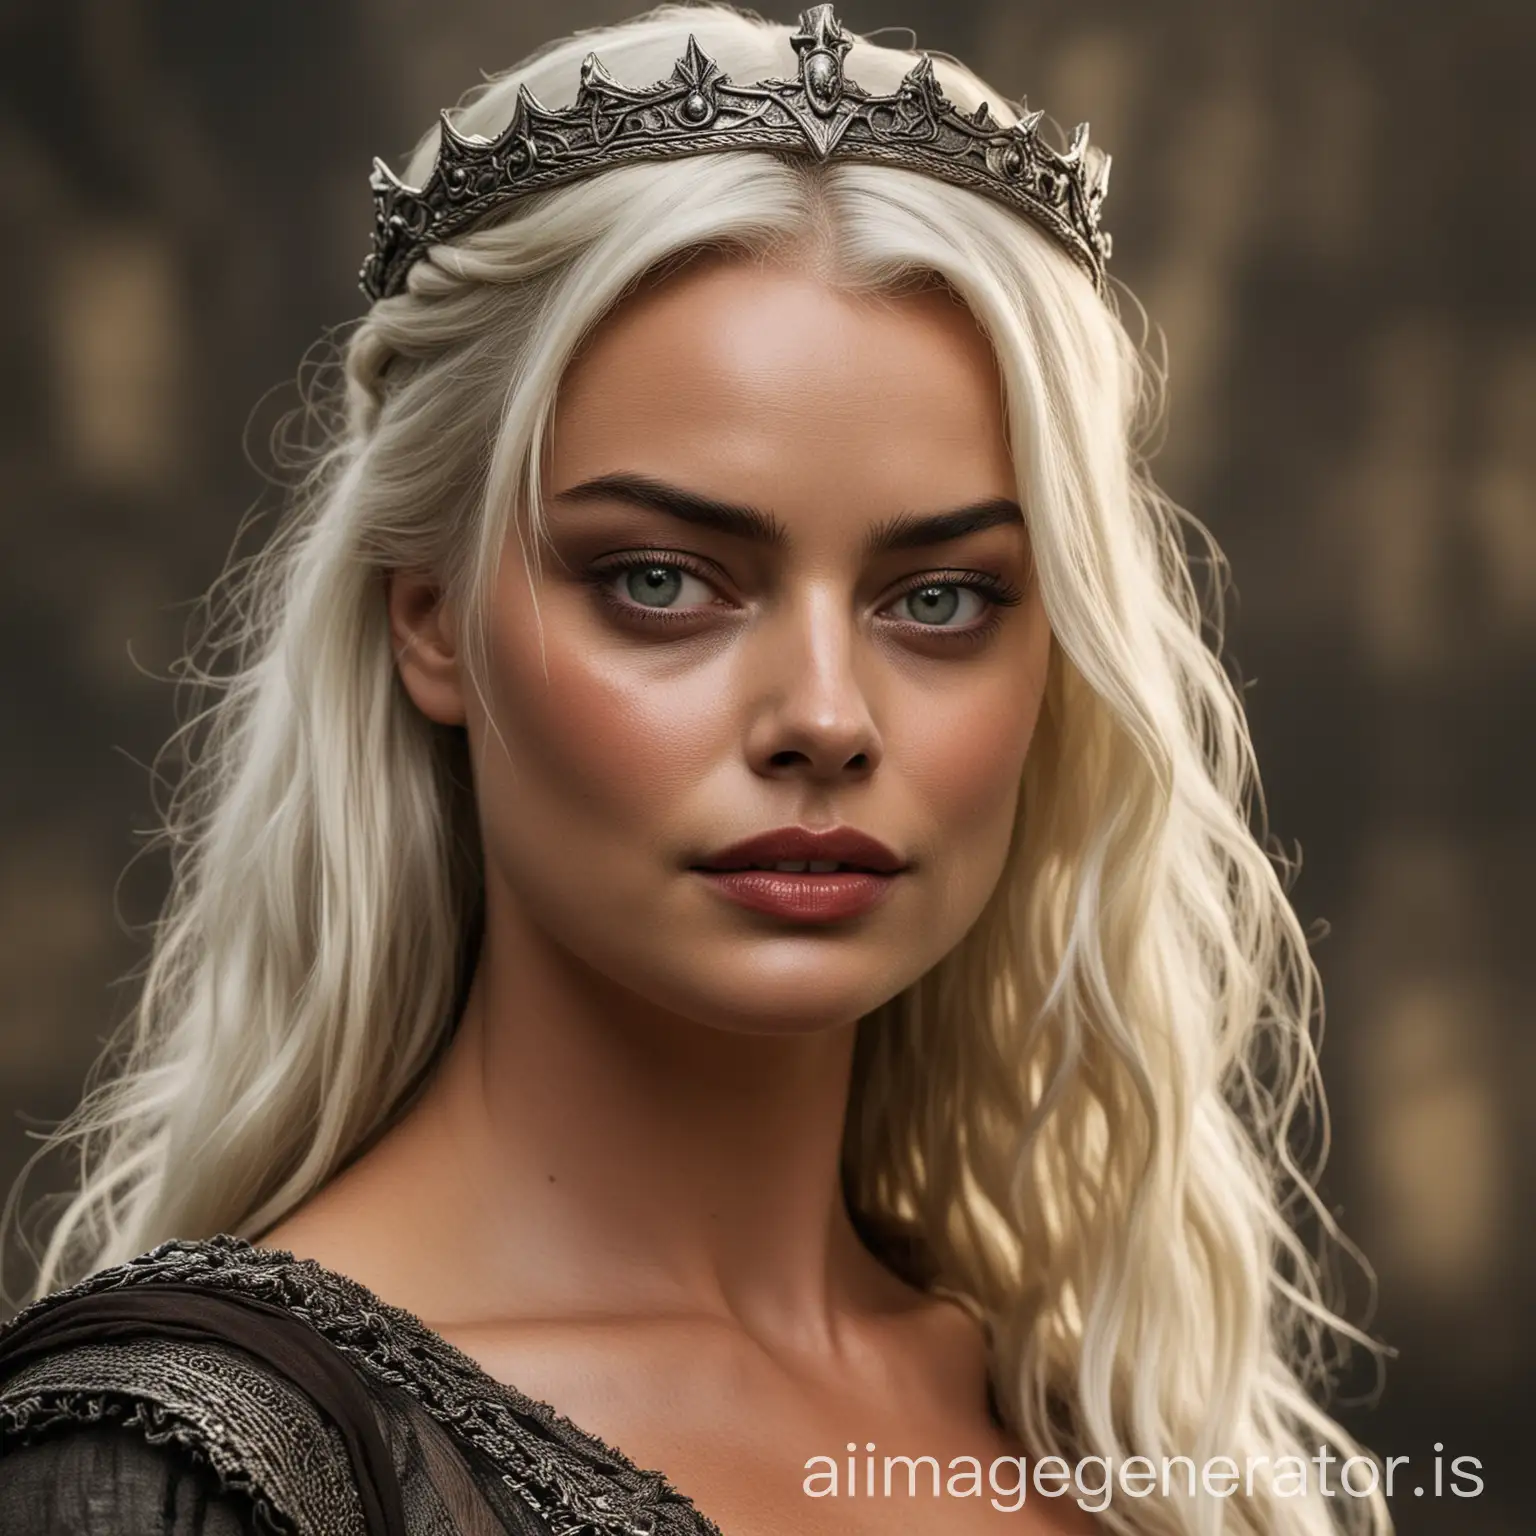 Margot-Robbie-Portraying-Queen-Rhaenys-Targaryen-in-a-Regal-Costume